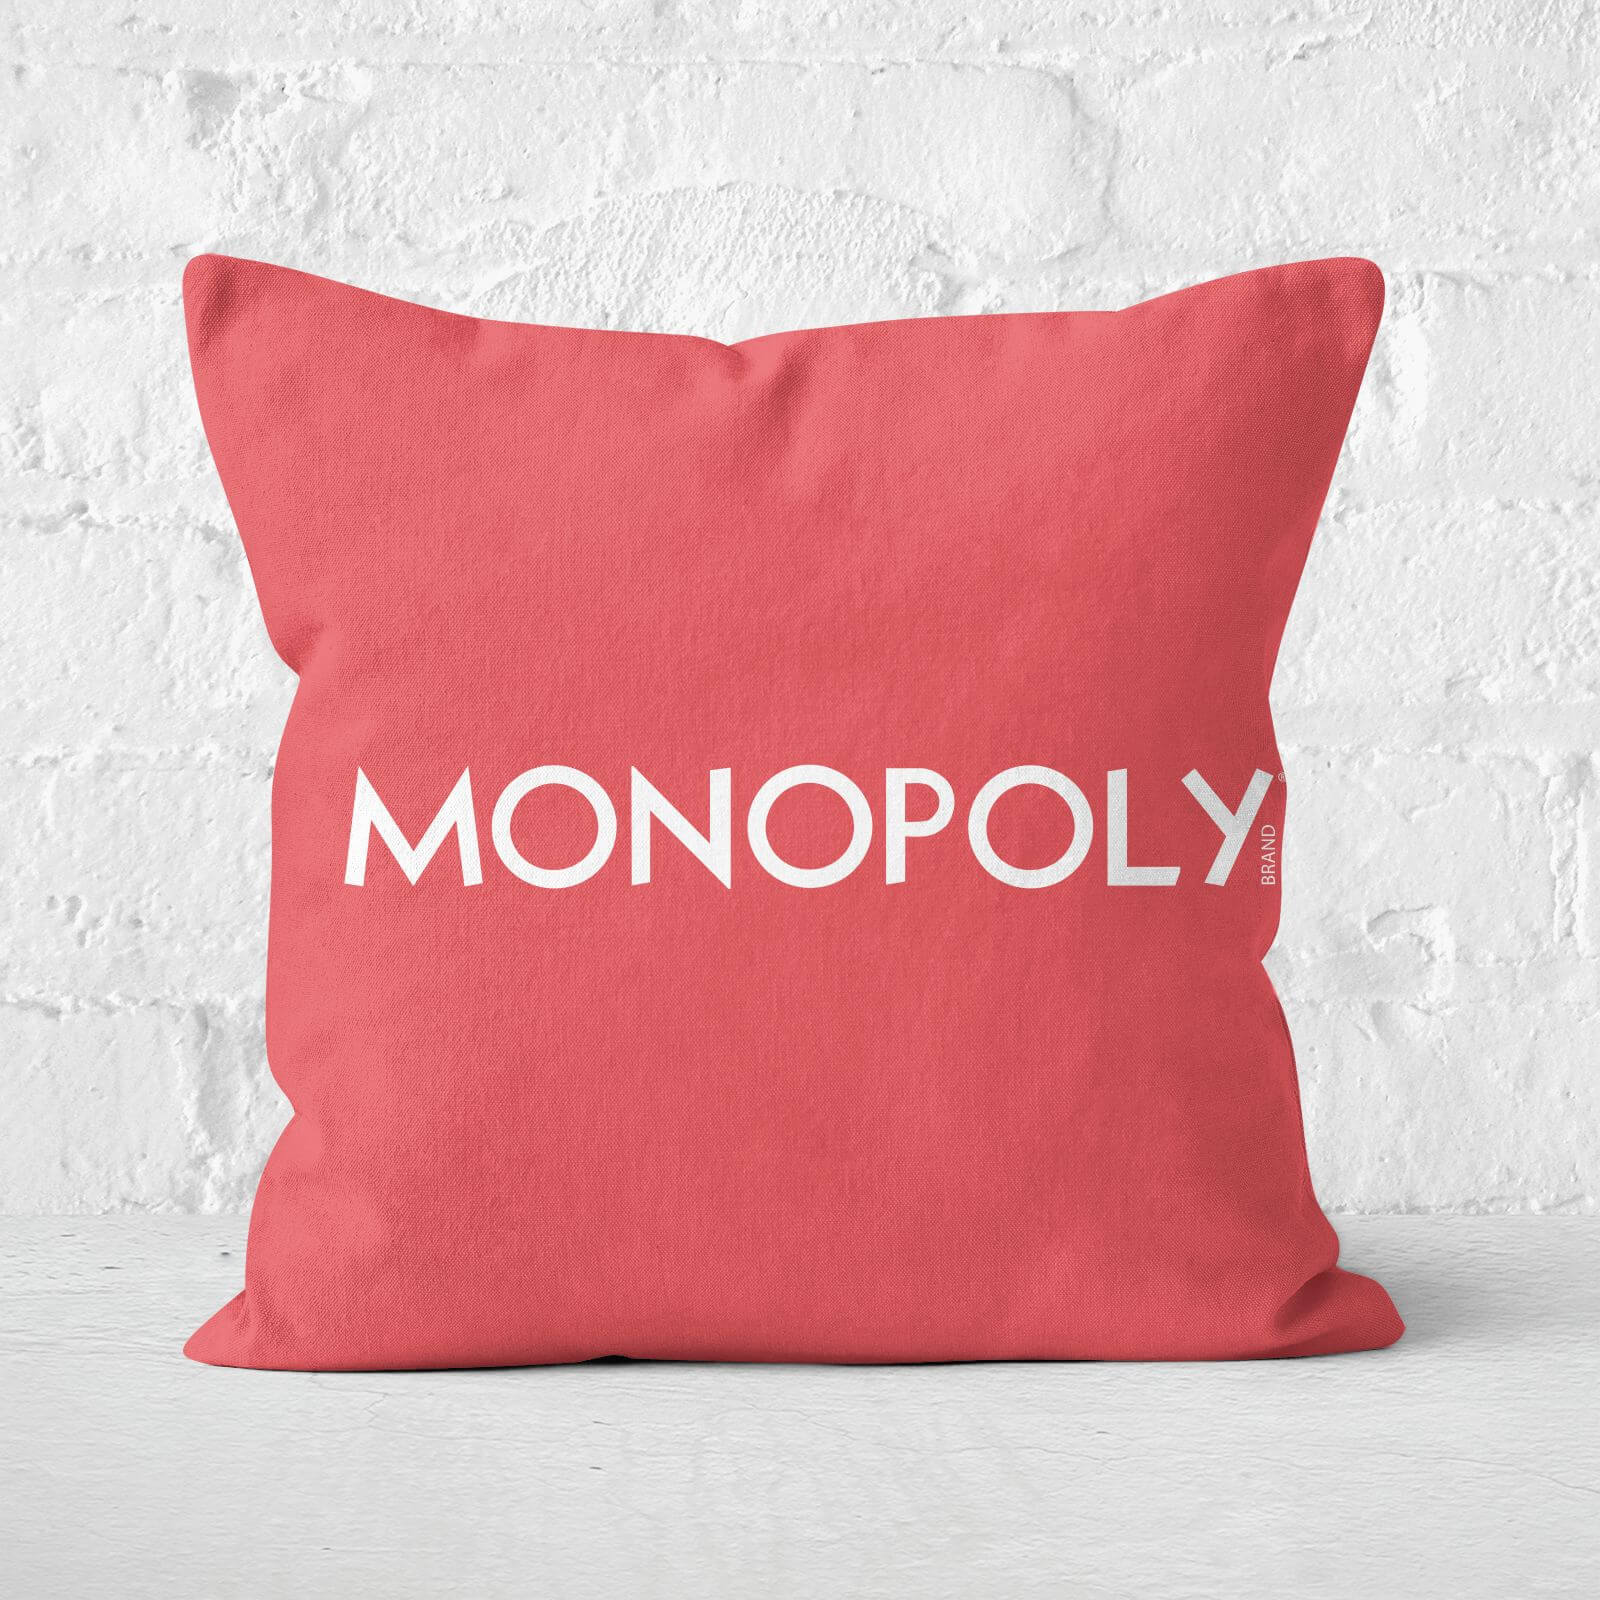 Monopoly Go Square Cushion - 40x40cm - Soft Touch von Monopoly